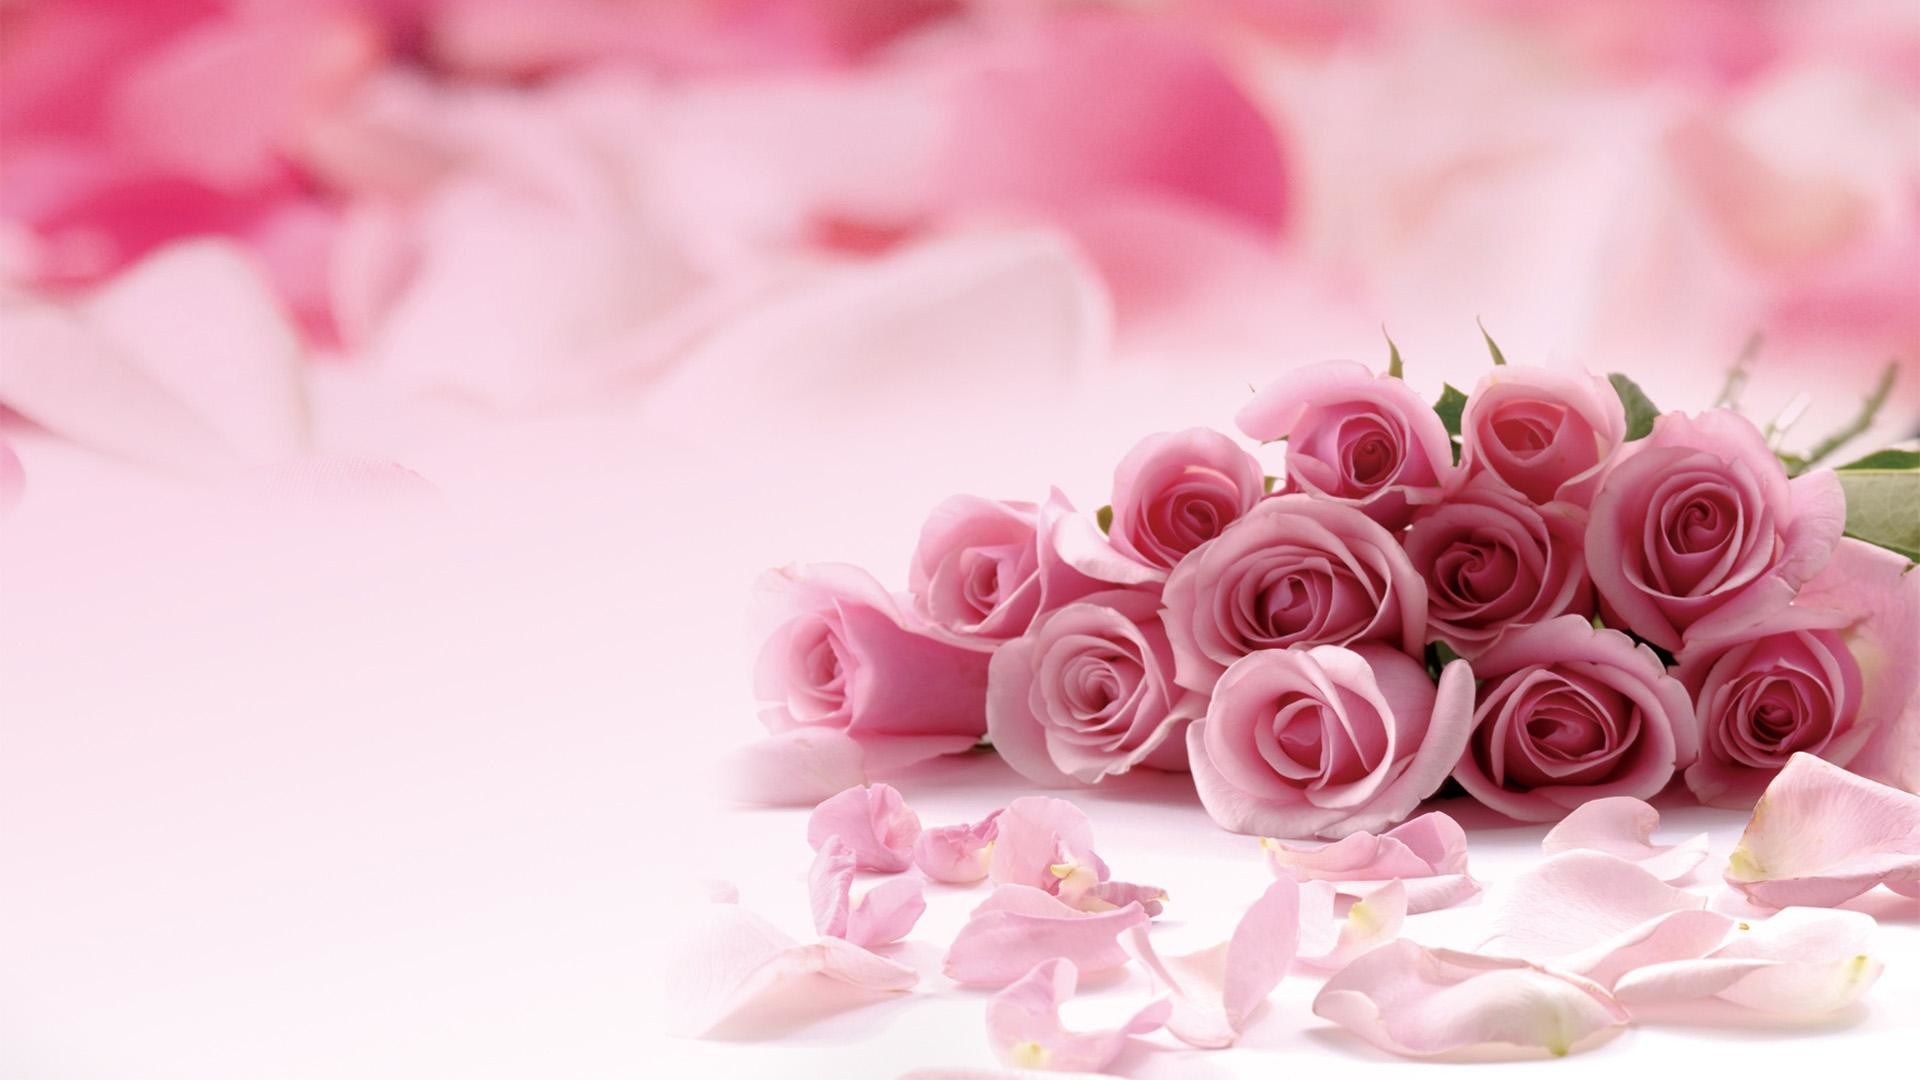 Pink roses picture HD Desktop Wallpaper 1920×1080 pink